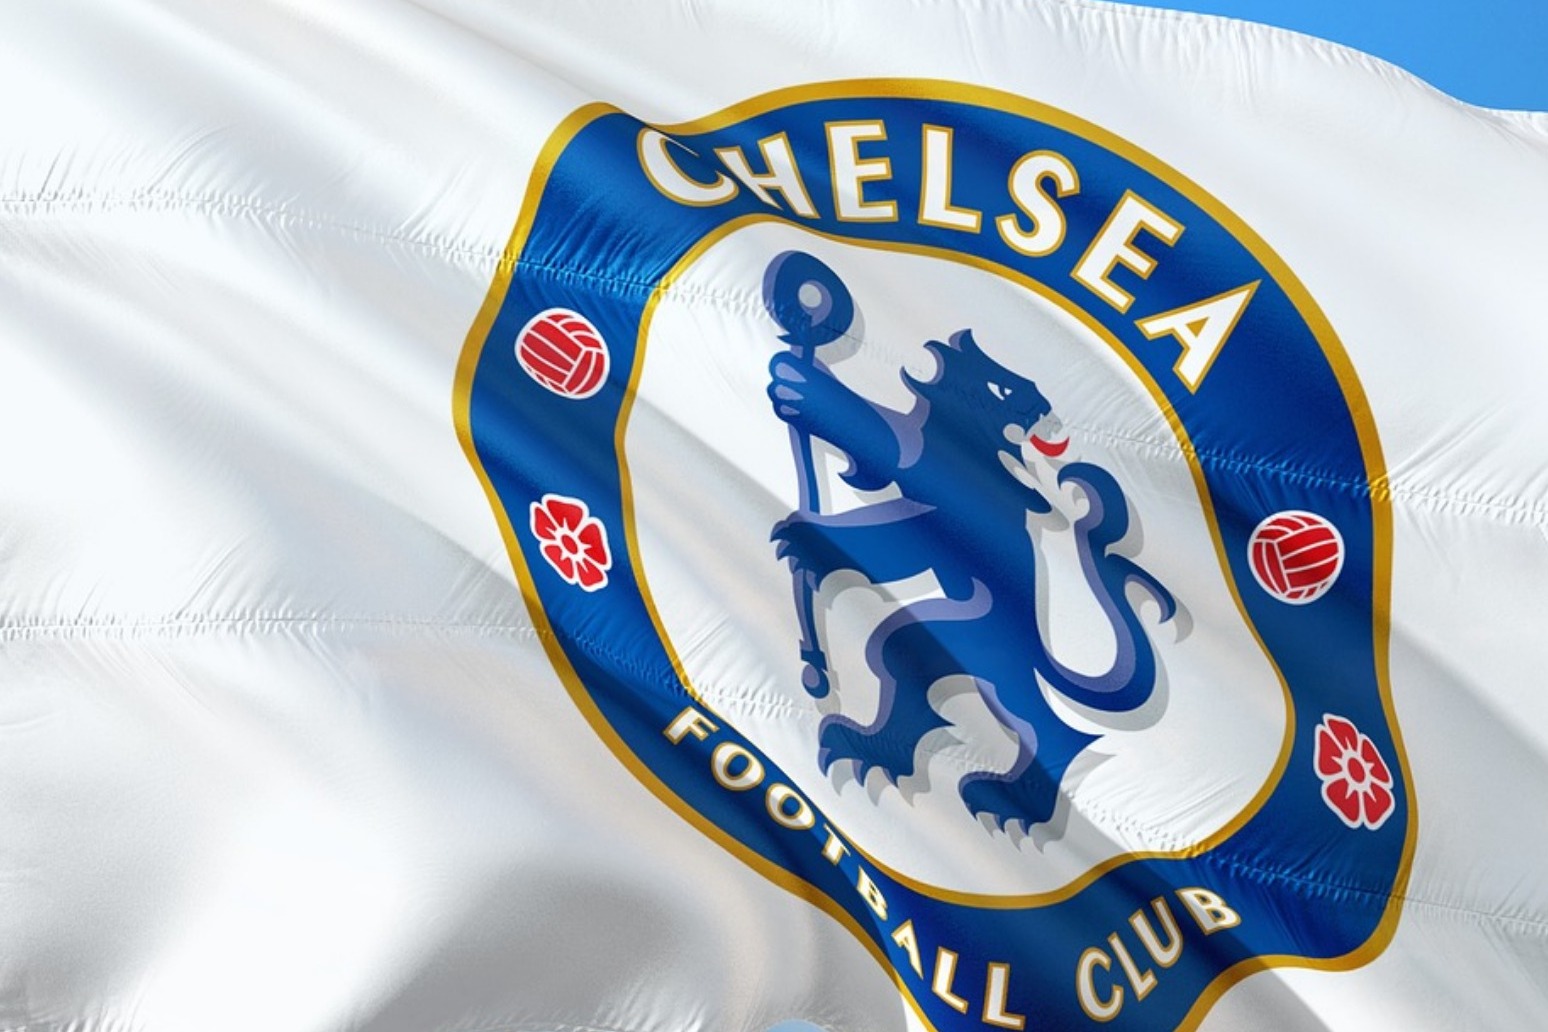 Chelsea transfer ban upheld by FIFA 